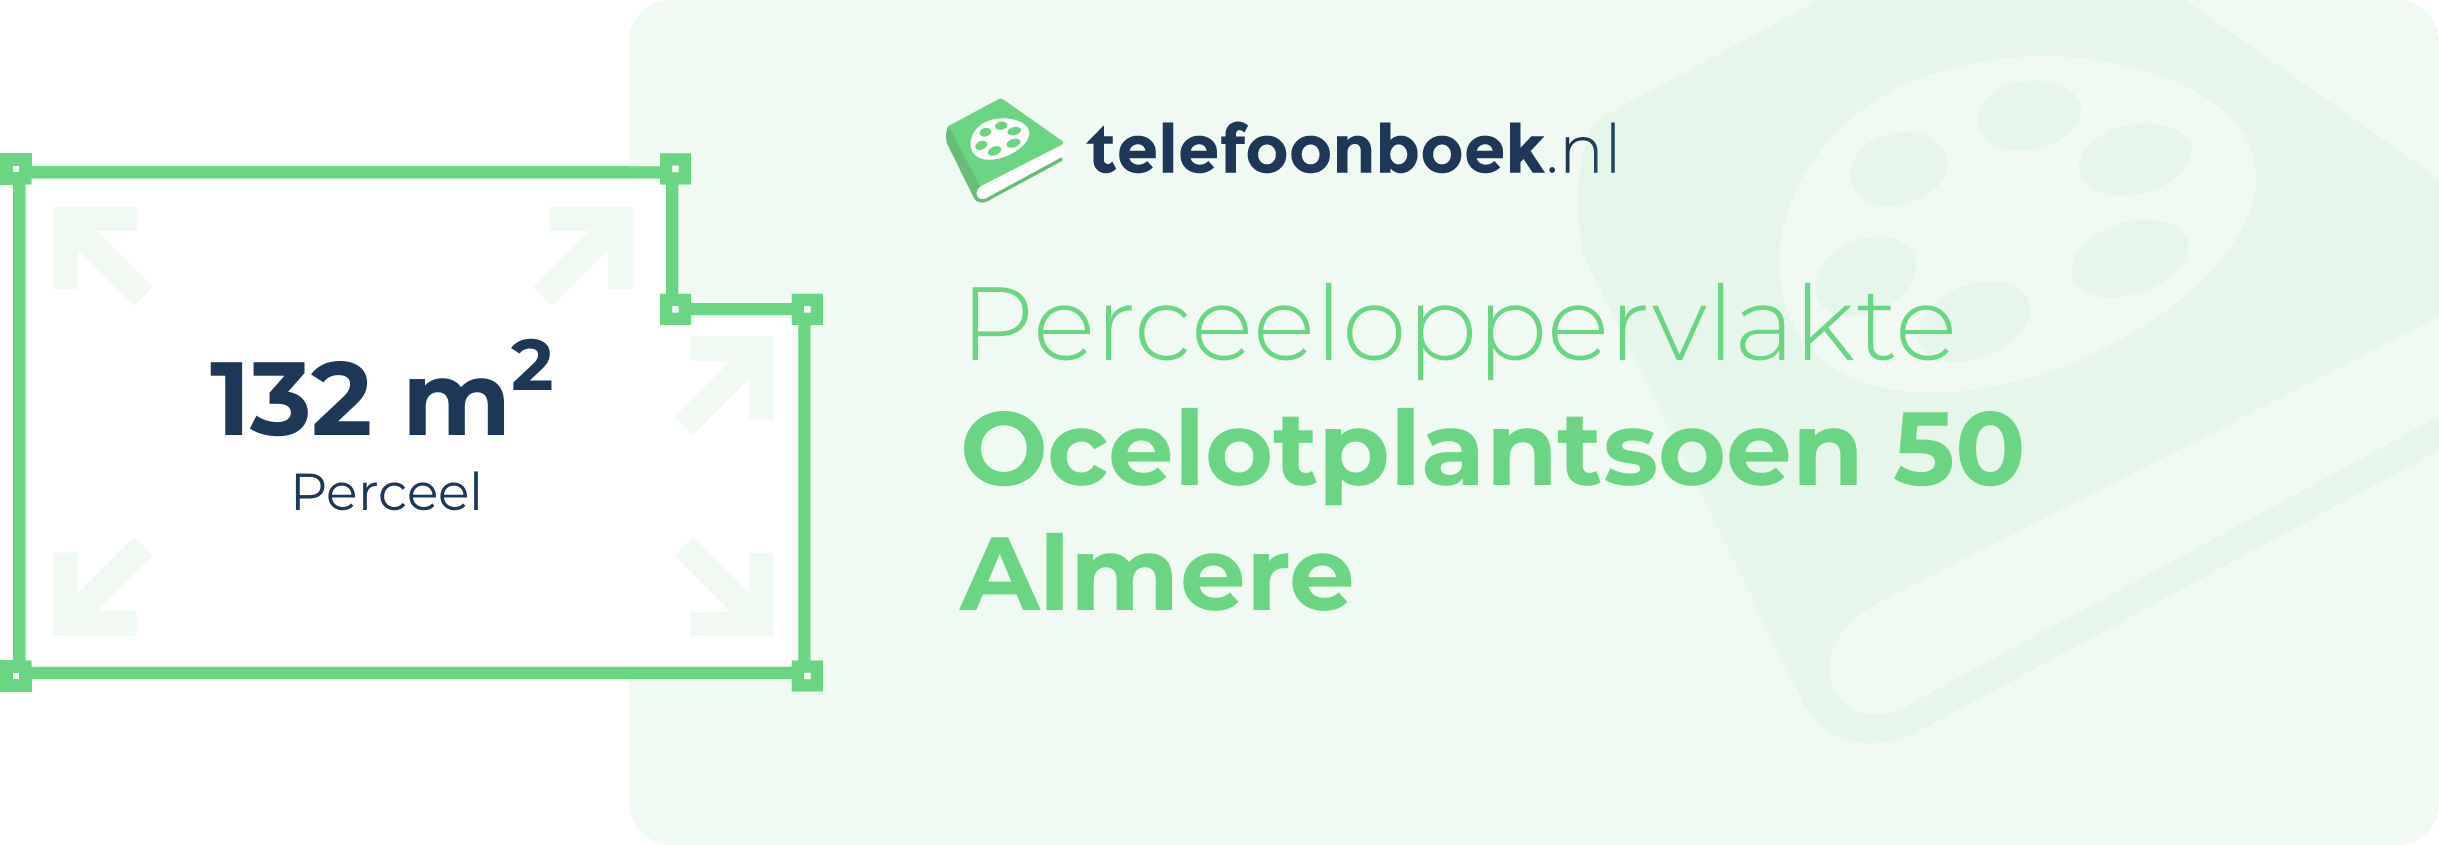 Perceeloppervlakte Ocelotplantsoen 50 Almere